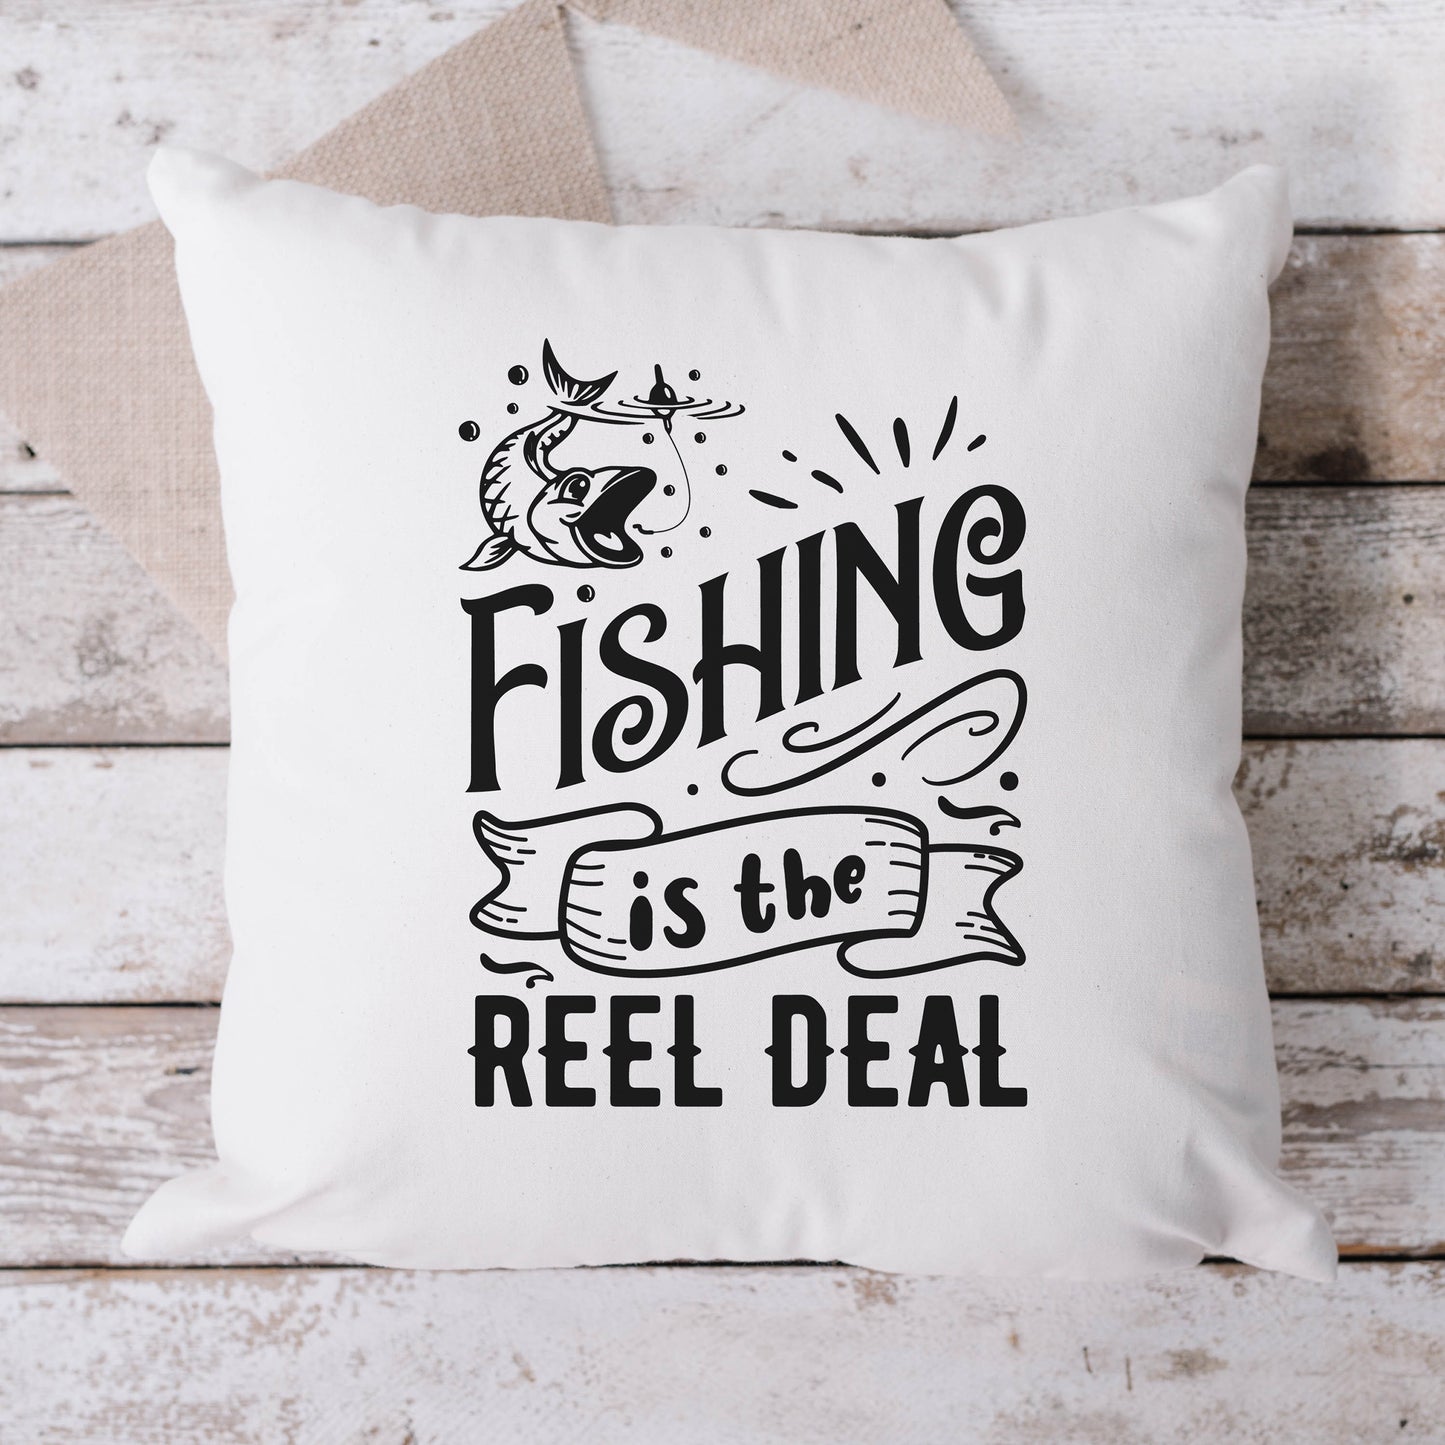 Fishing reel deal - .de